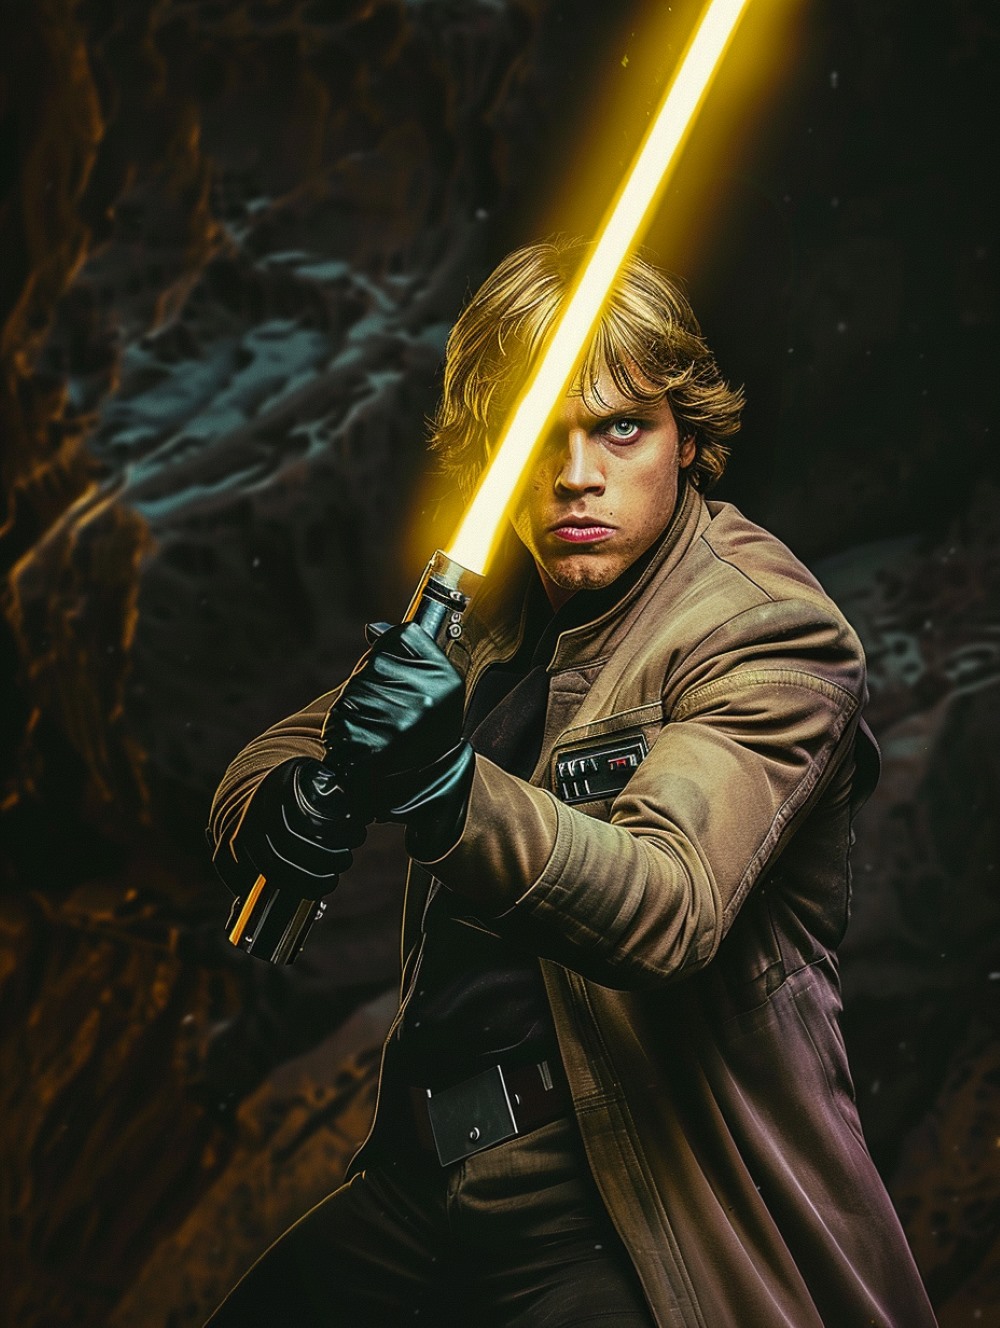 Luke Skywalker is holding a yellow lightsaber